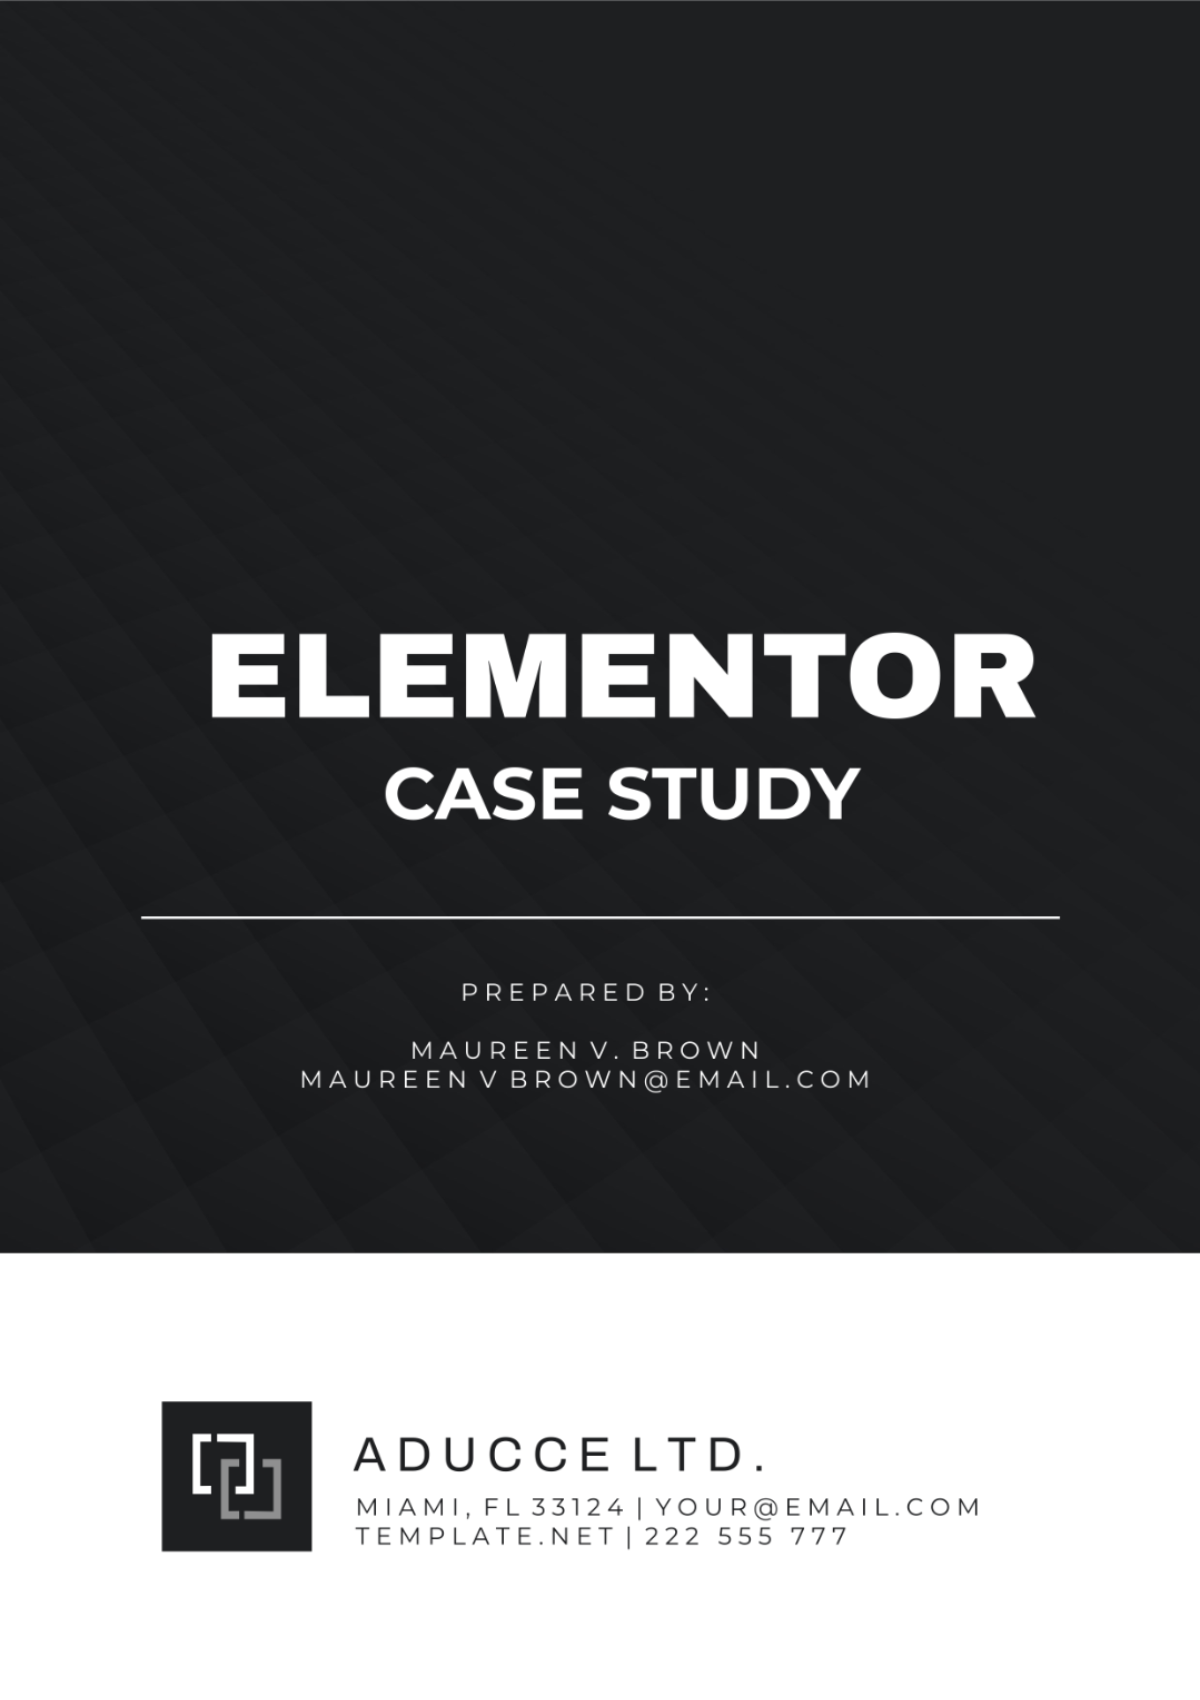 Elementor Case Study Template